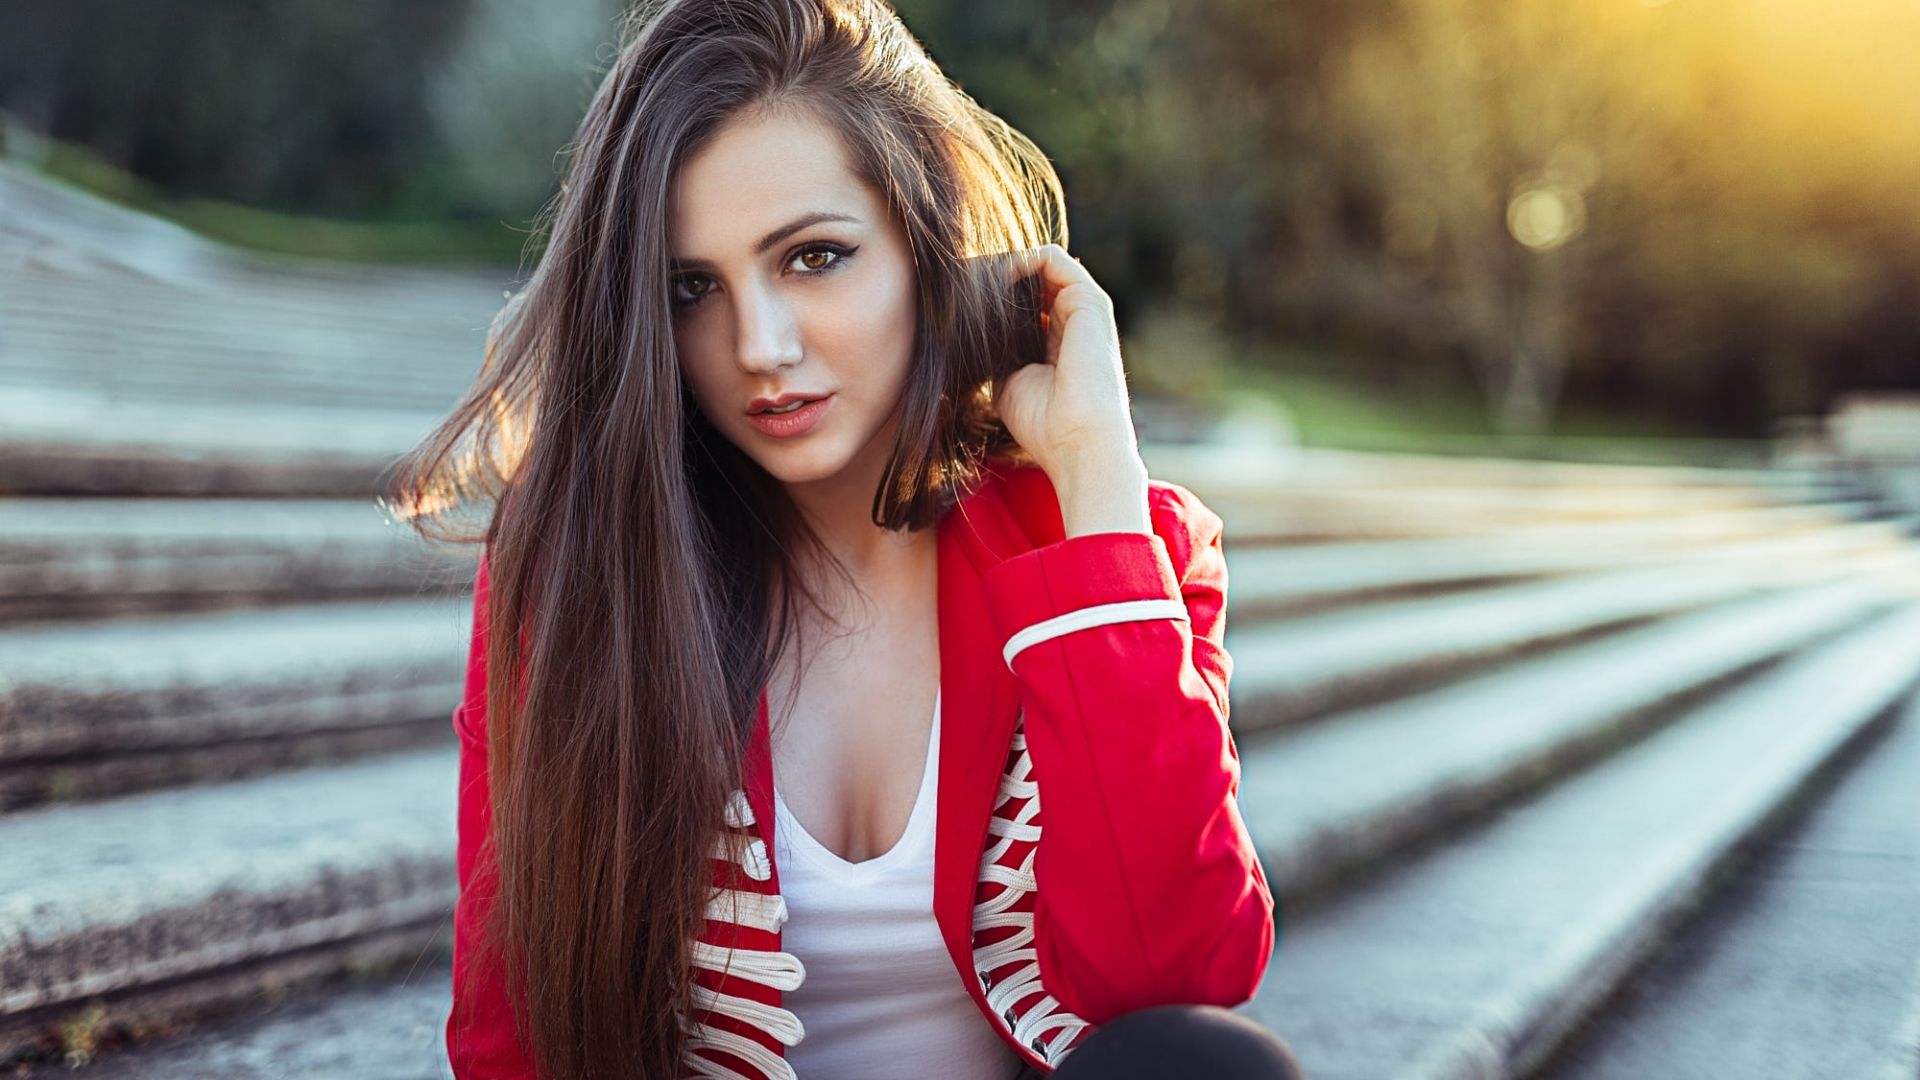 Wallpaper Brunette, hot girl model, sit, outdoor